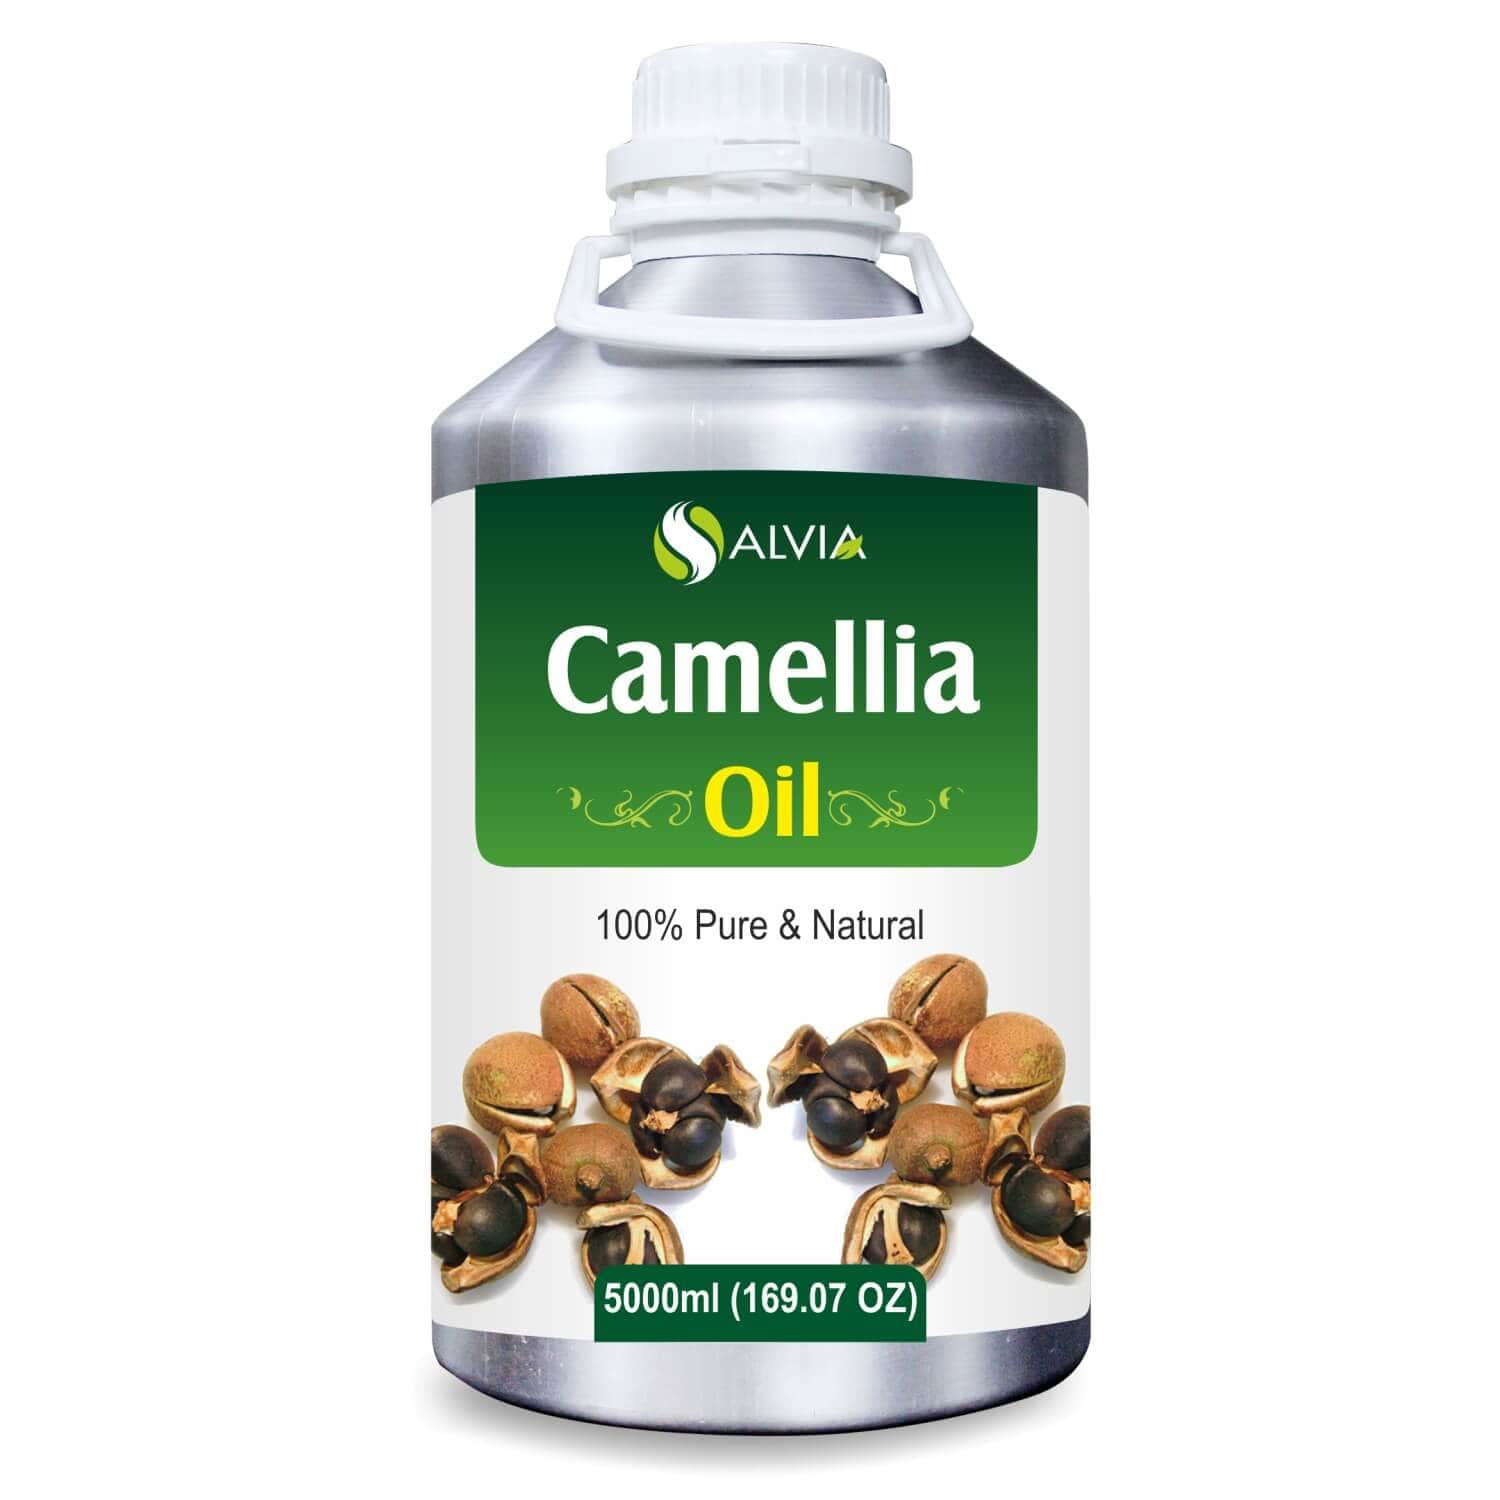 Salvia Natural Carrier Oils 5000ml Camellia Oil (Camellia oleifera) Pure & Natural Carrier Oil